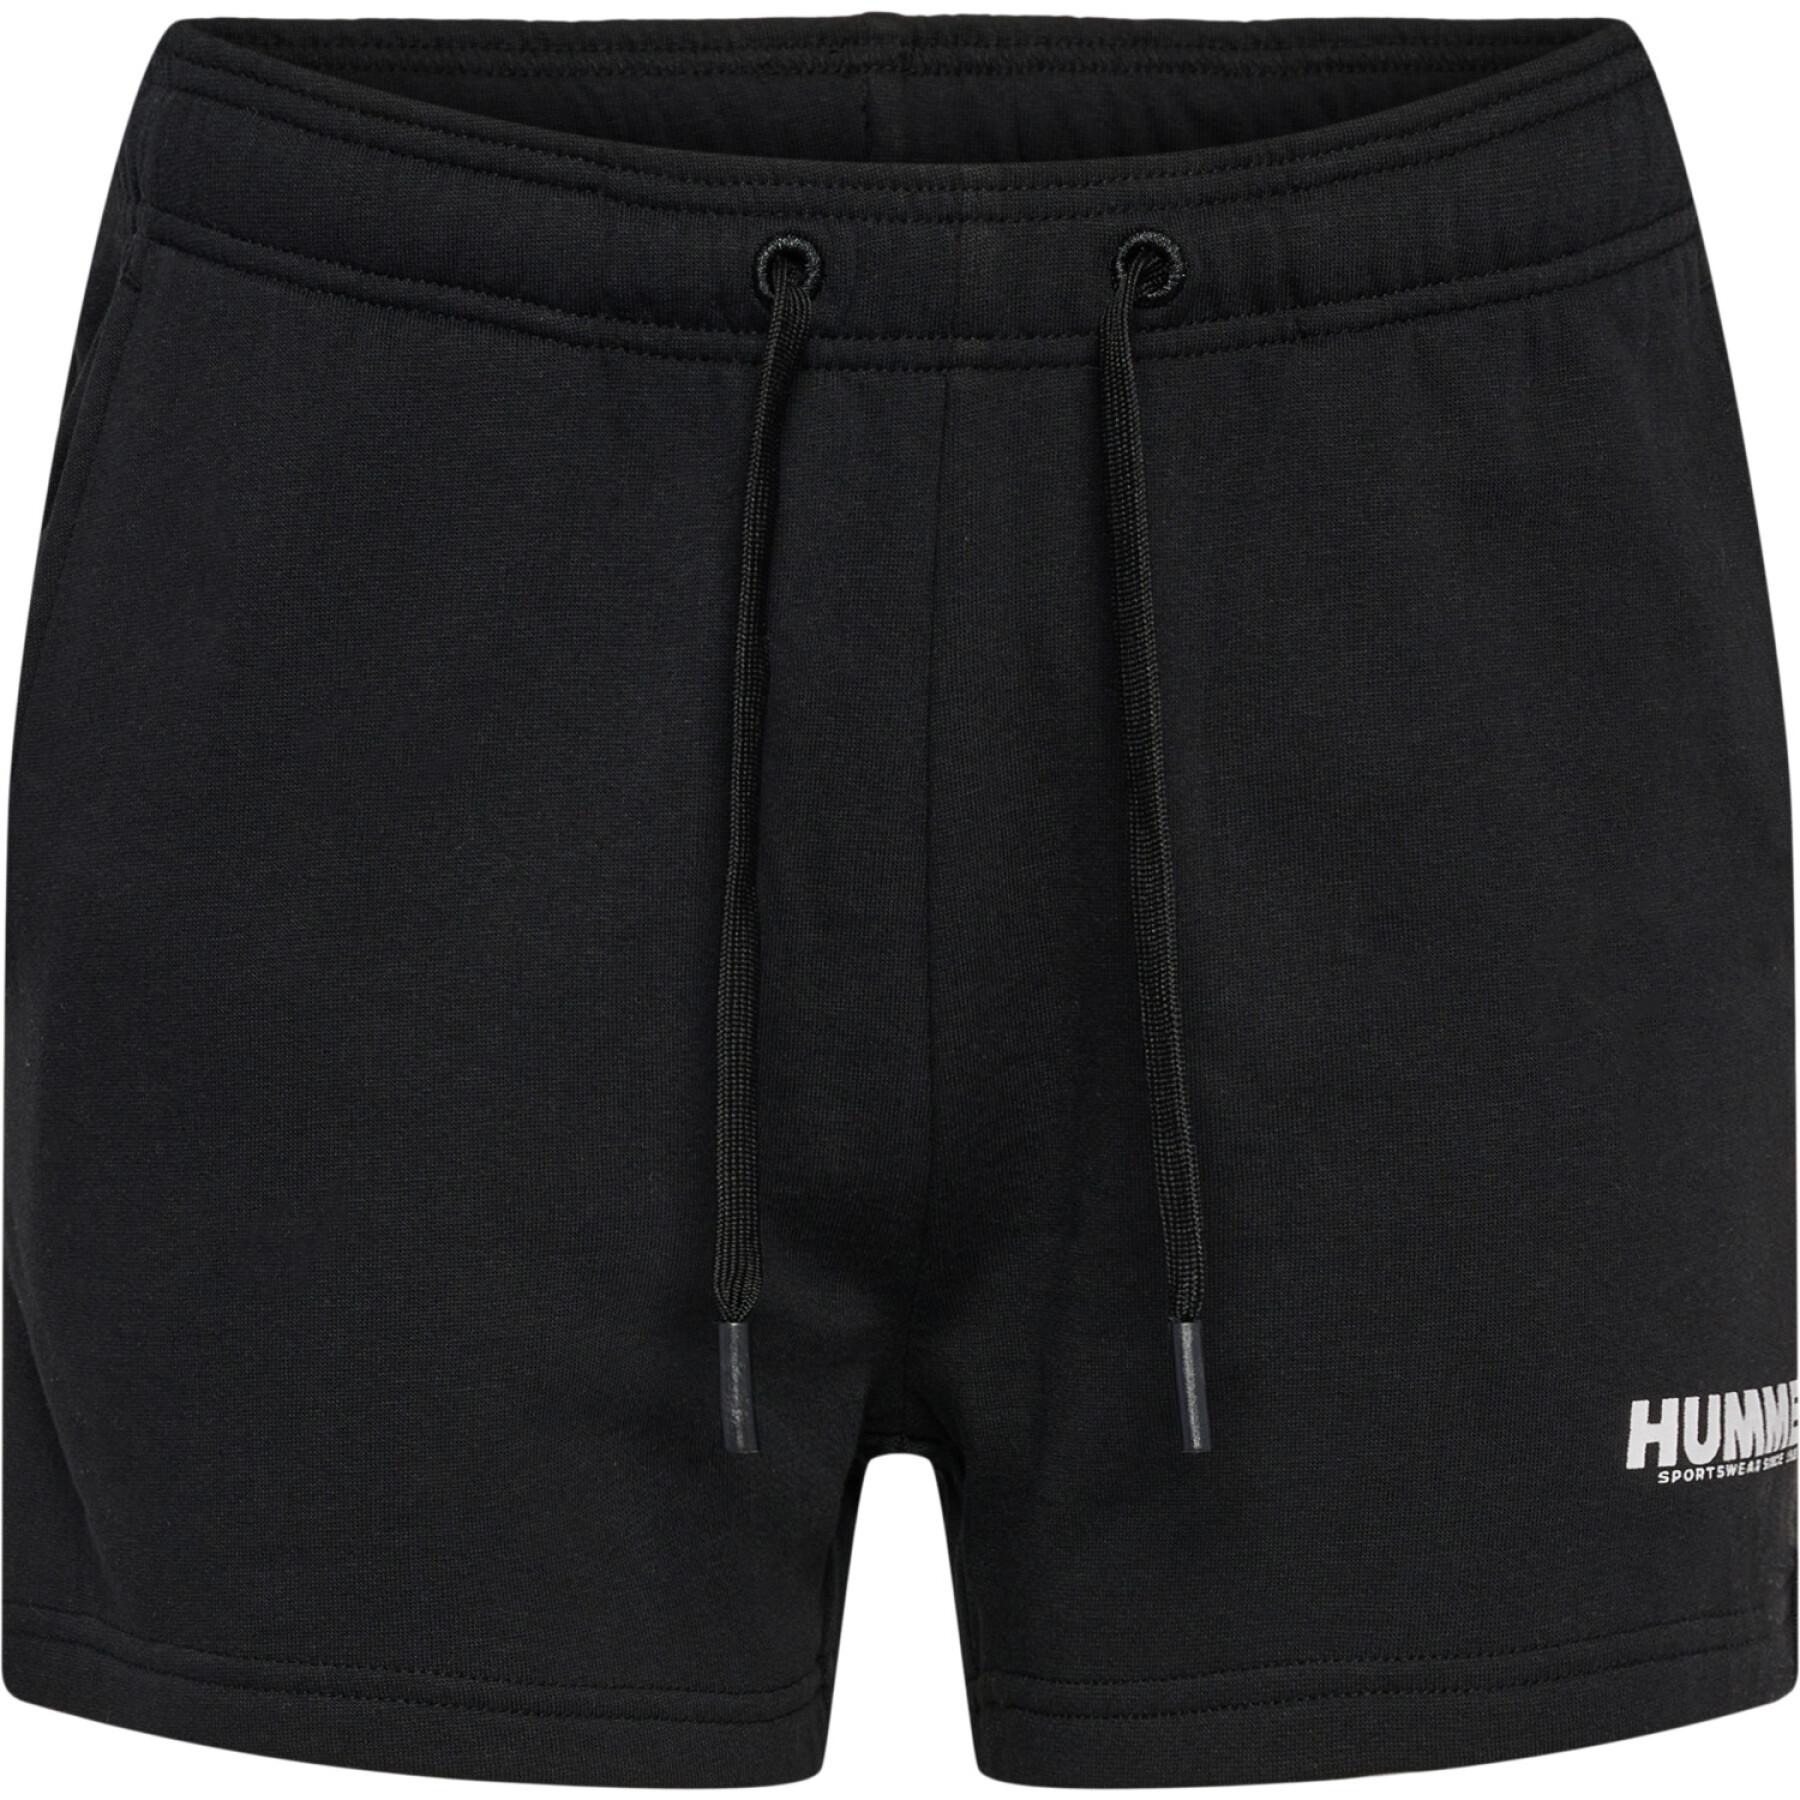 Women\'s shorts Hummel Legacy - Hummel - Brands - Lifestyle